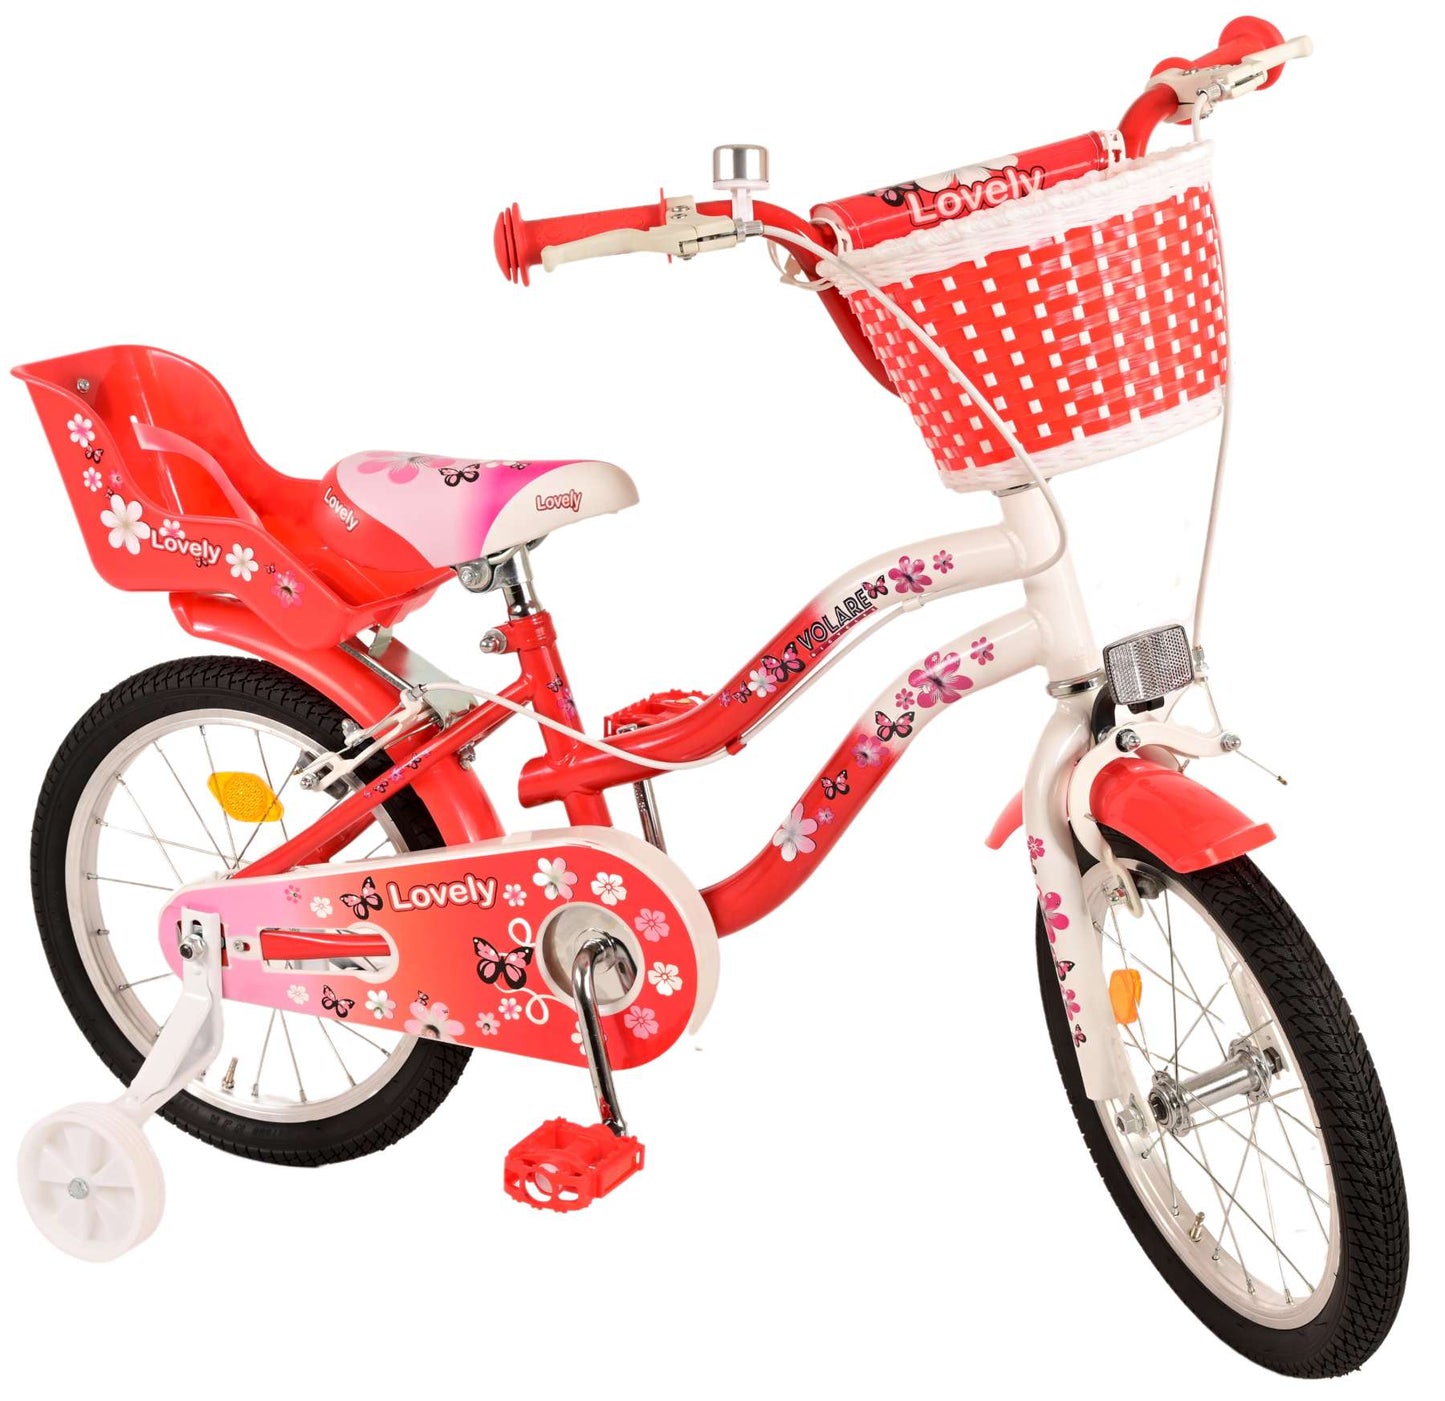 Volare Lovely Children's Bicycle - Girls - 16 pulgadas - Blanco rojo - Dos frenos de mano